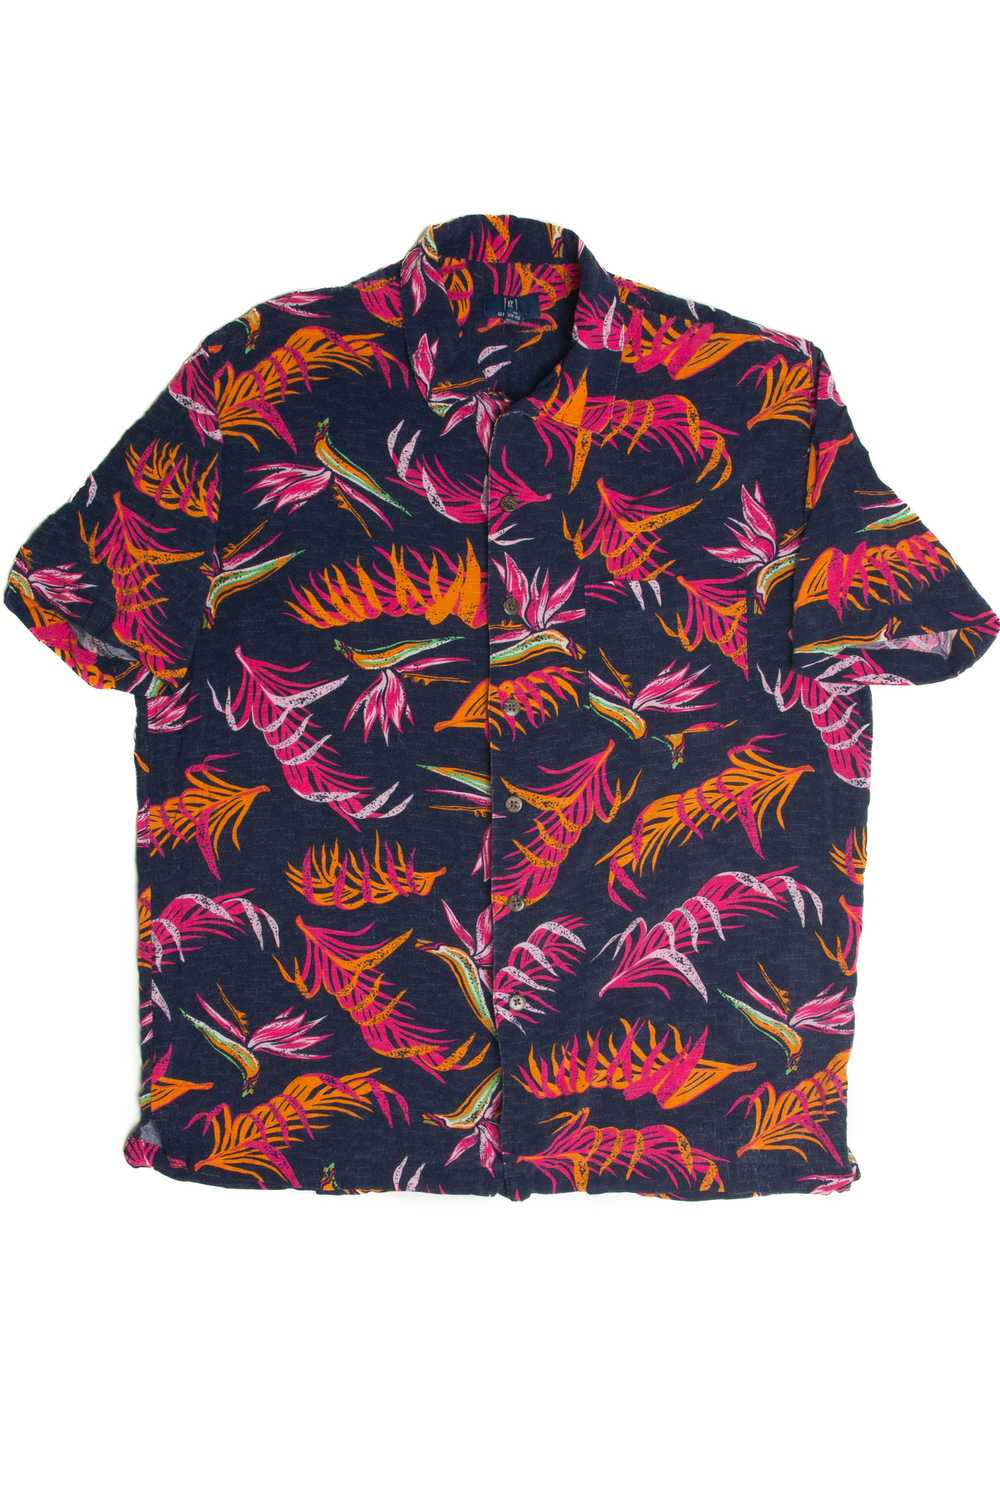 Vintage Frond Art Hawaiian Shirt - image 1